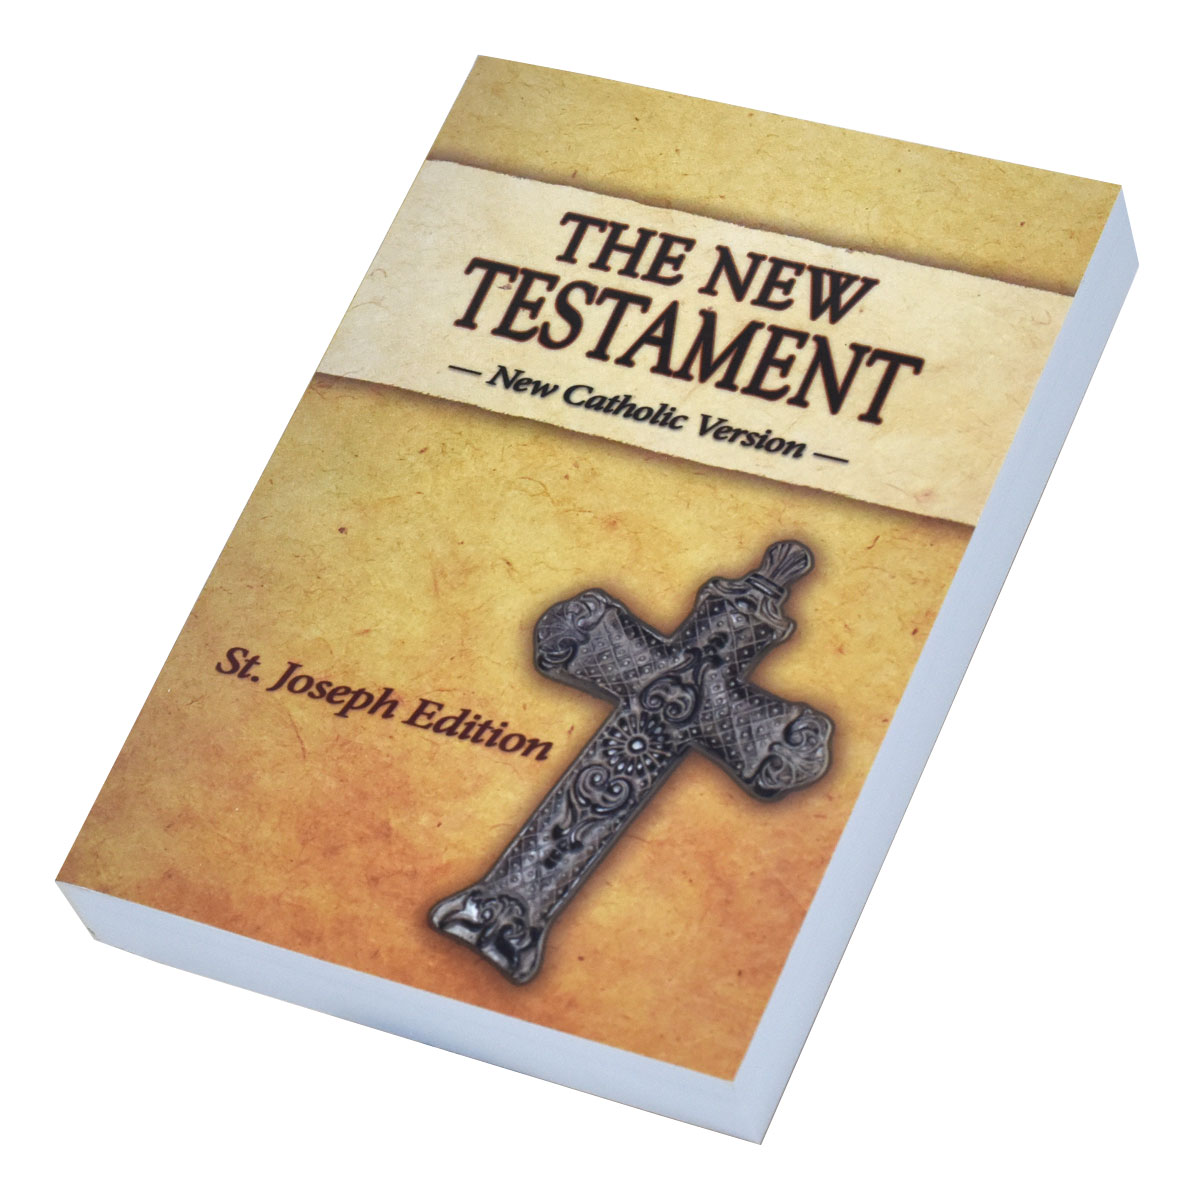 St. Joseph New Catholic Version New Testament Vest Pocket Edition Paperback 650/05